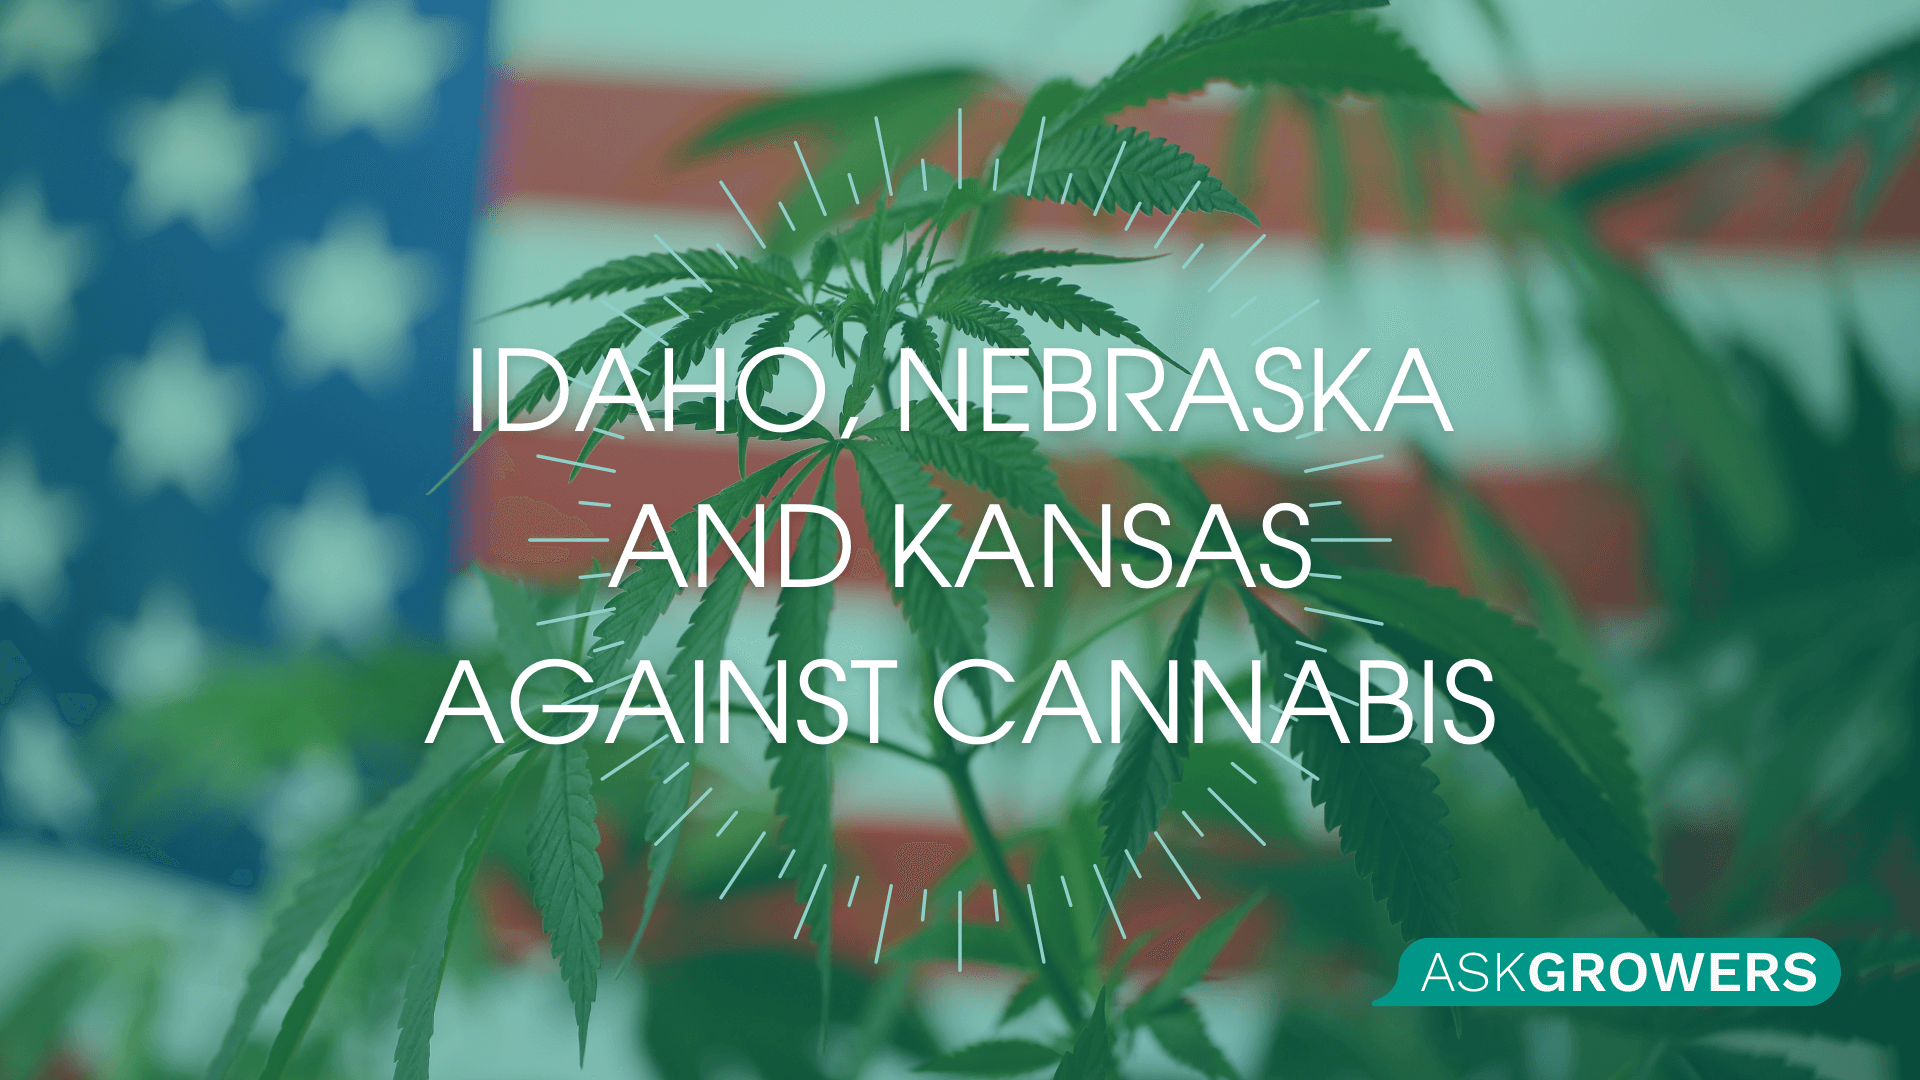 Why Idaho, Nebraska, and Kansas Are Strongly Opposed to Cannabis?